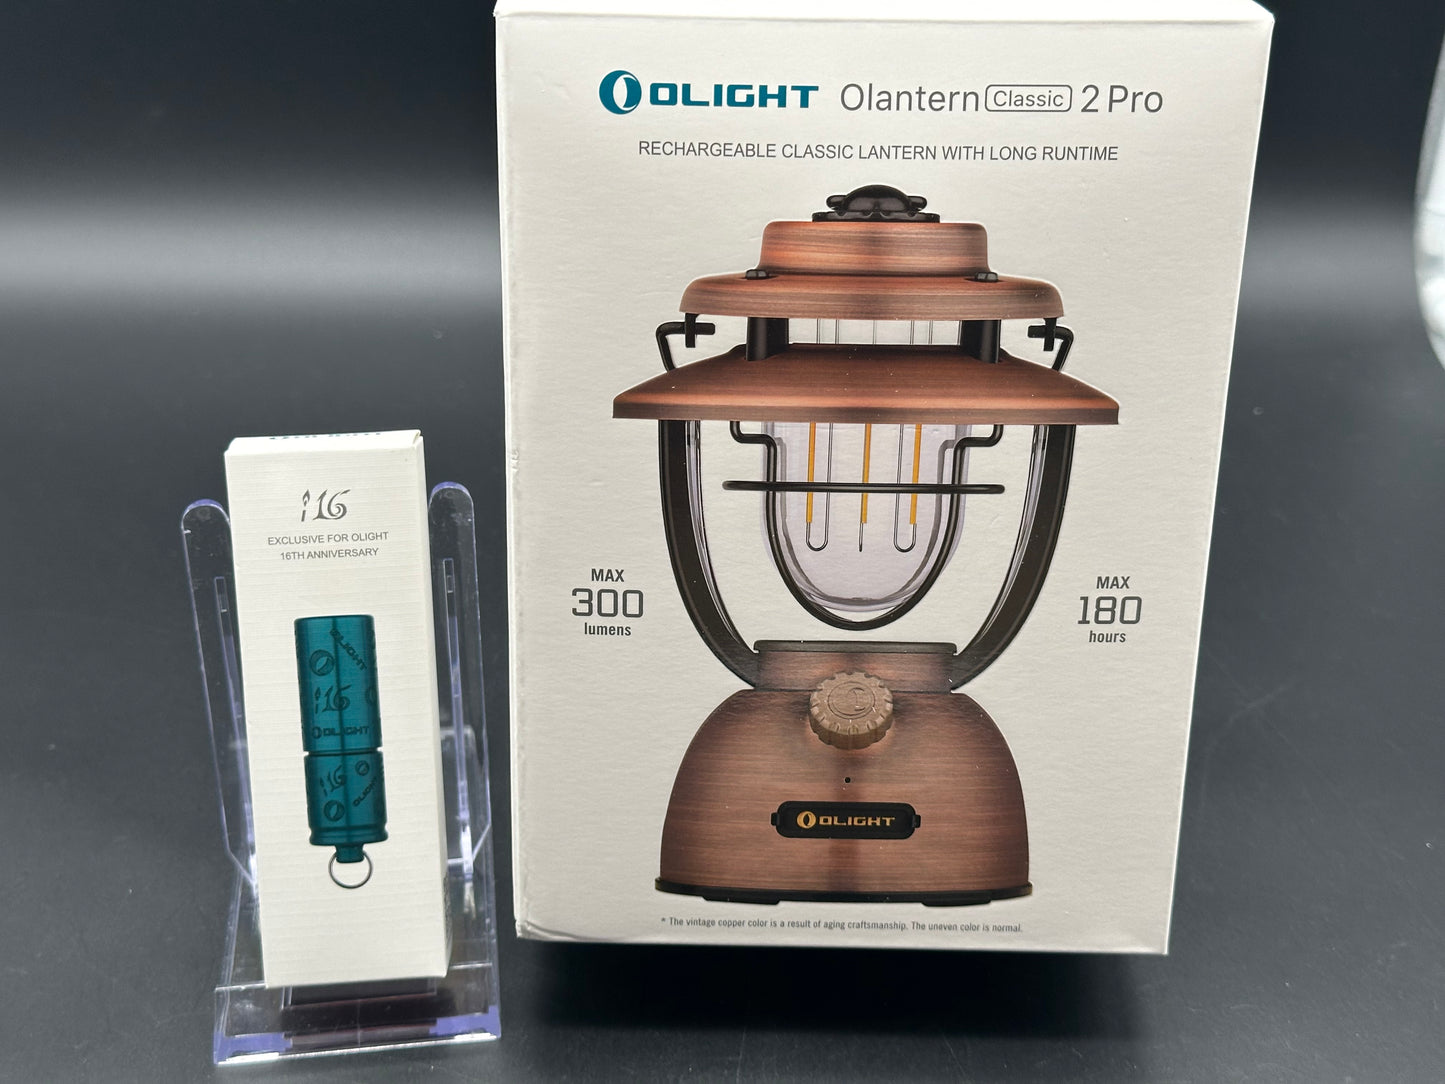 Olight Olantern Classic 2 Pro & i16 16th Anniversary flashlight bundle